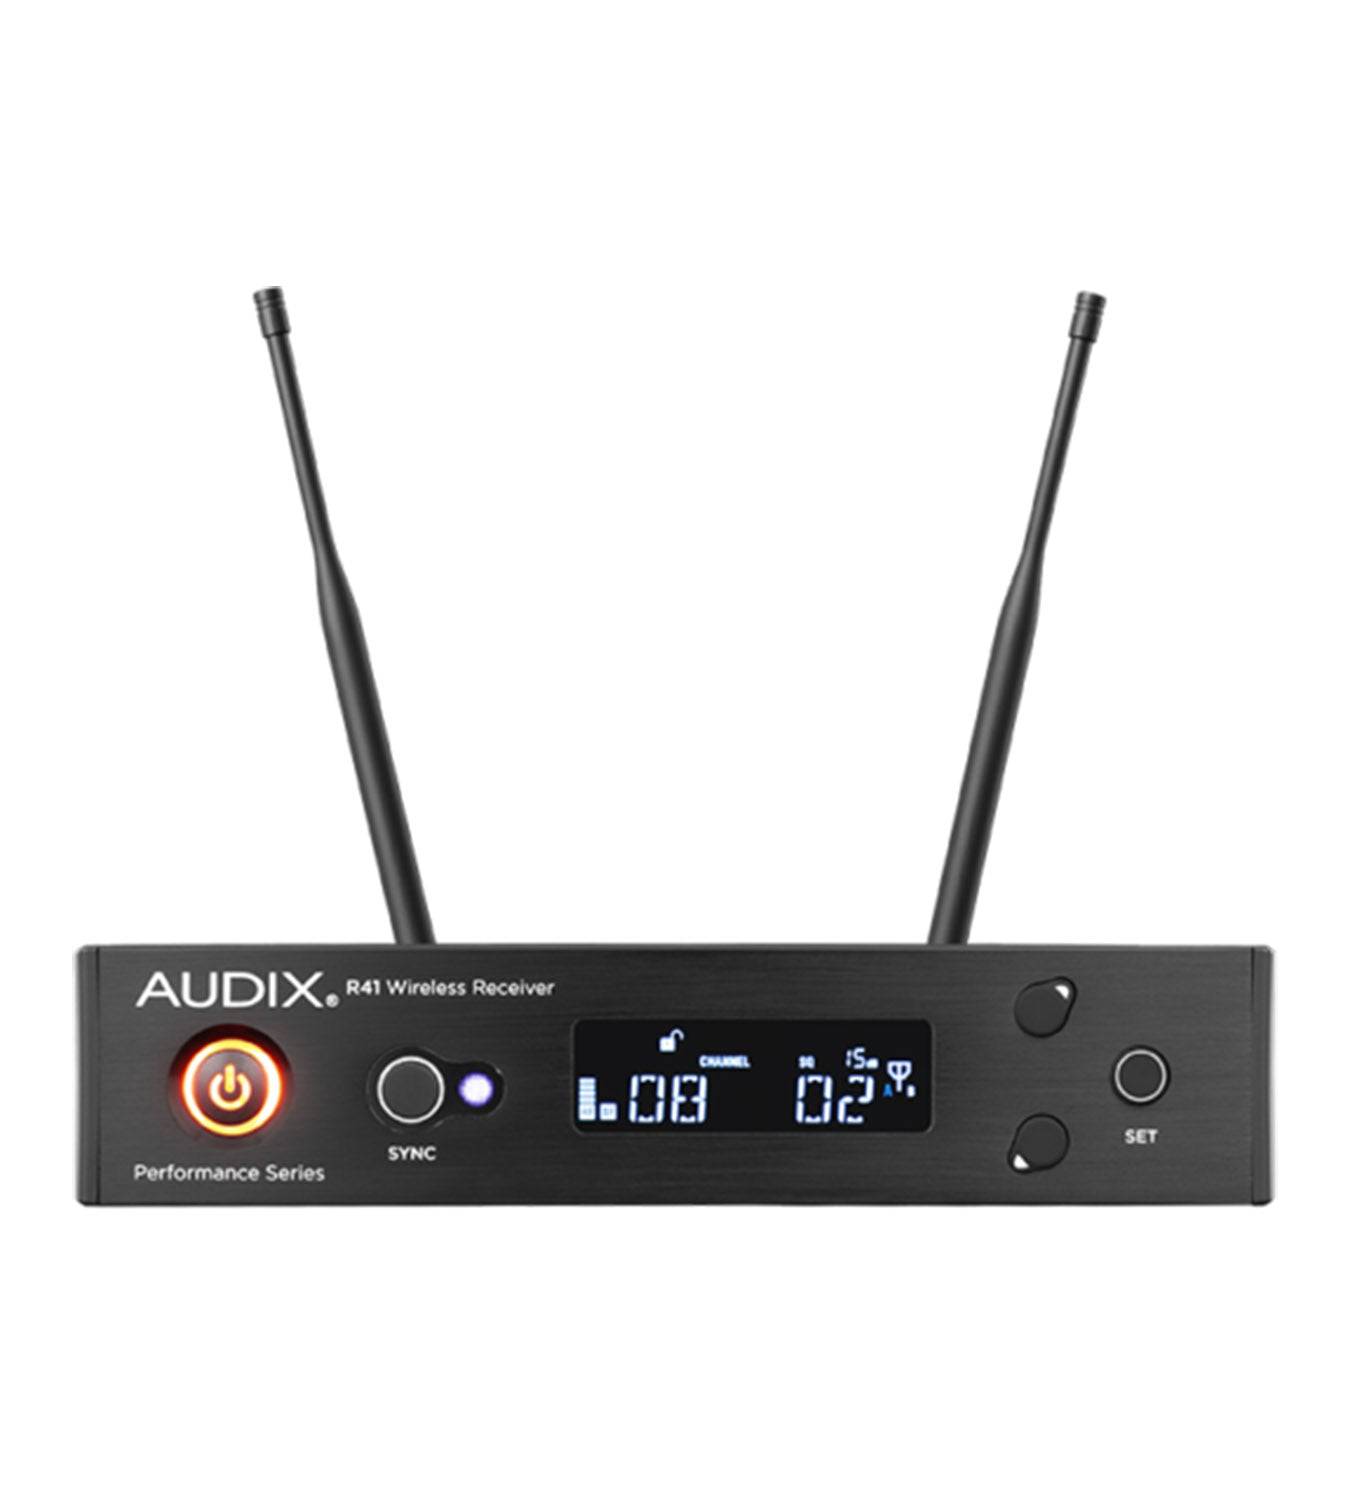 Audix AP41 BP Single-Channel Bodypack Wireless System - 522 - 554 MHz - Hollywood DJ